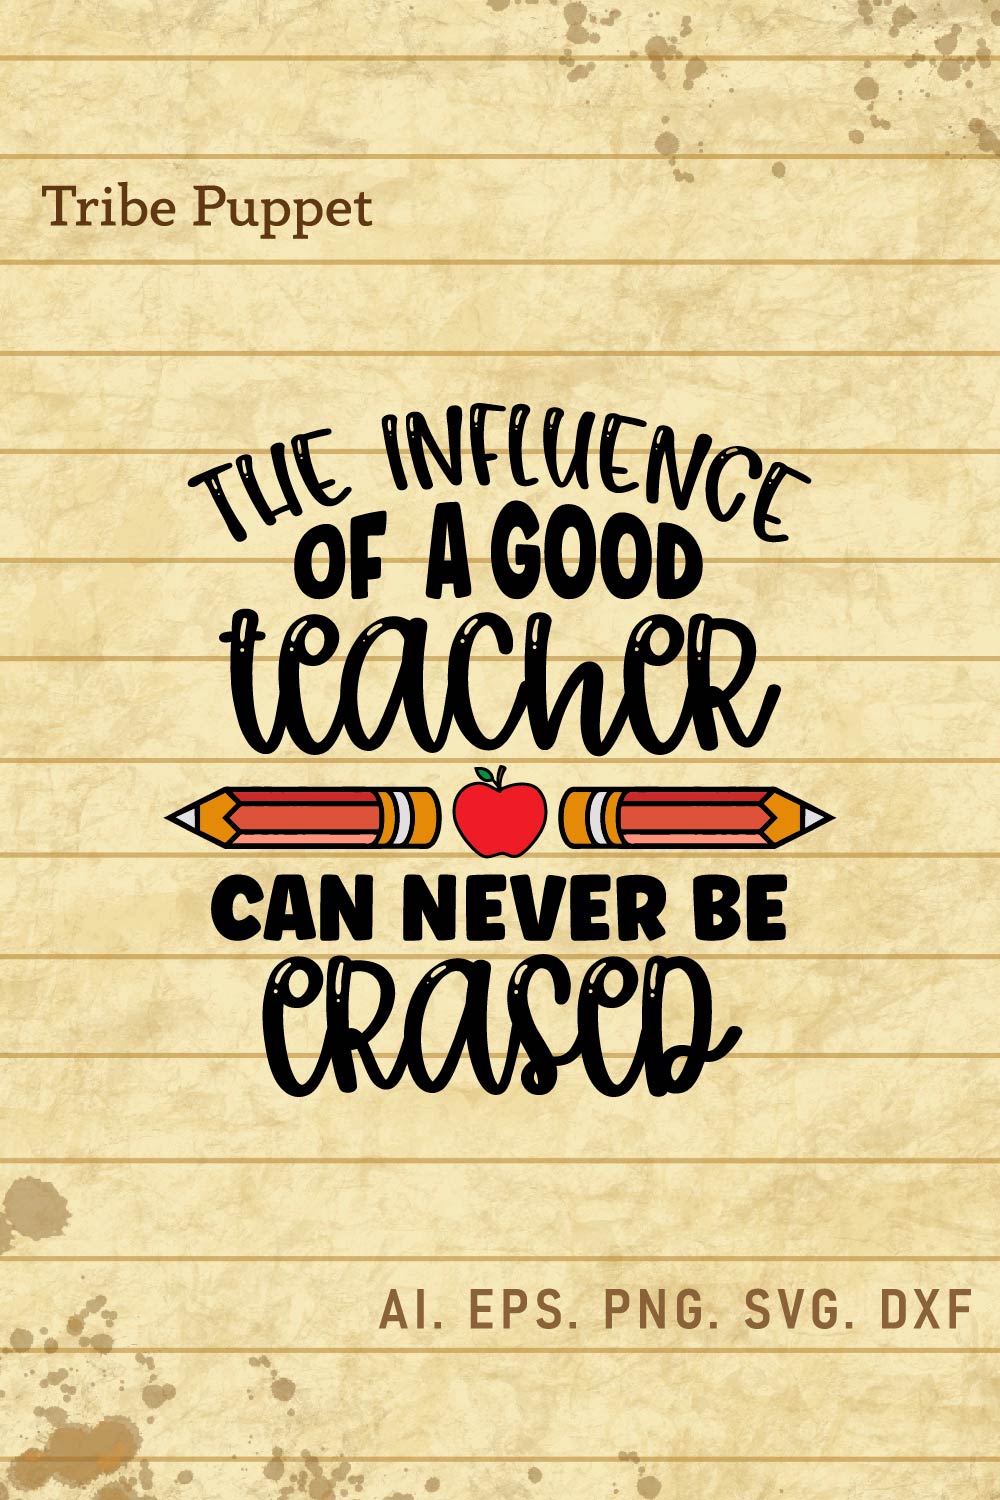 Teachers Quotes pinterest preview image.